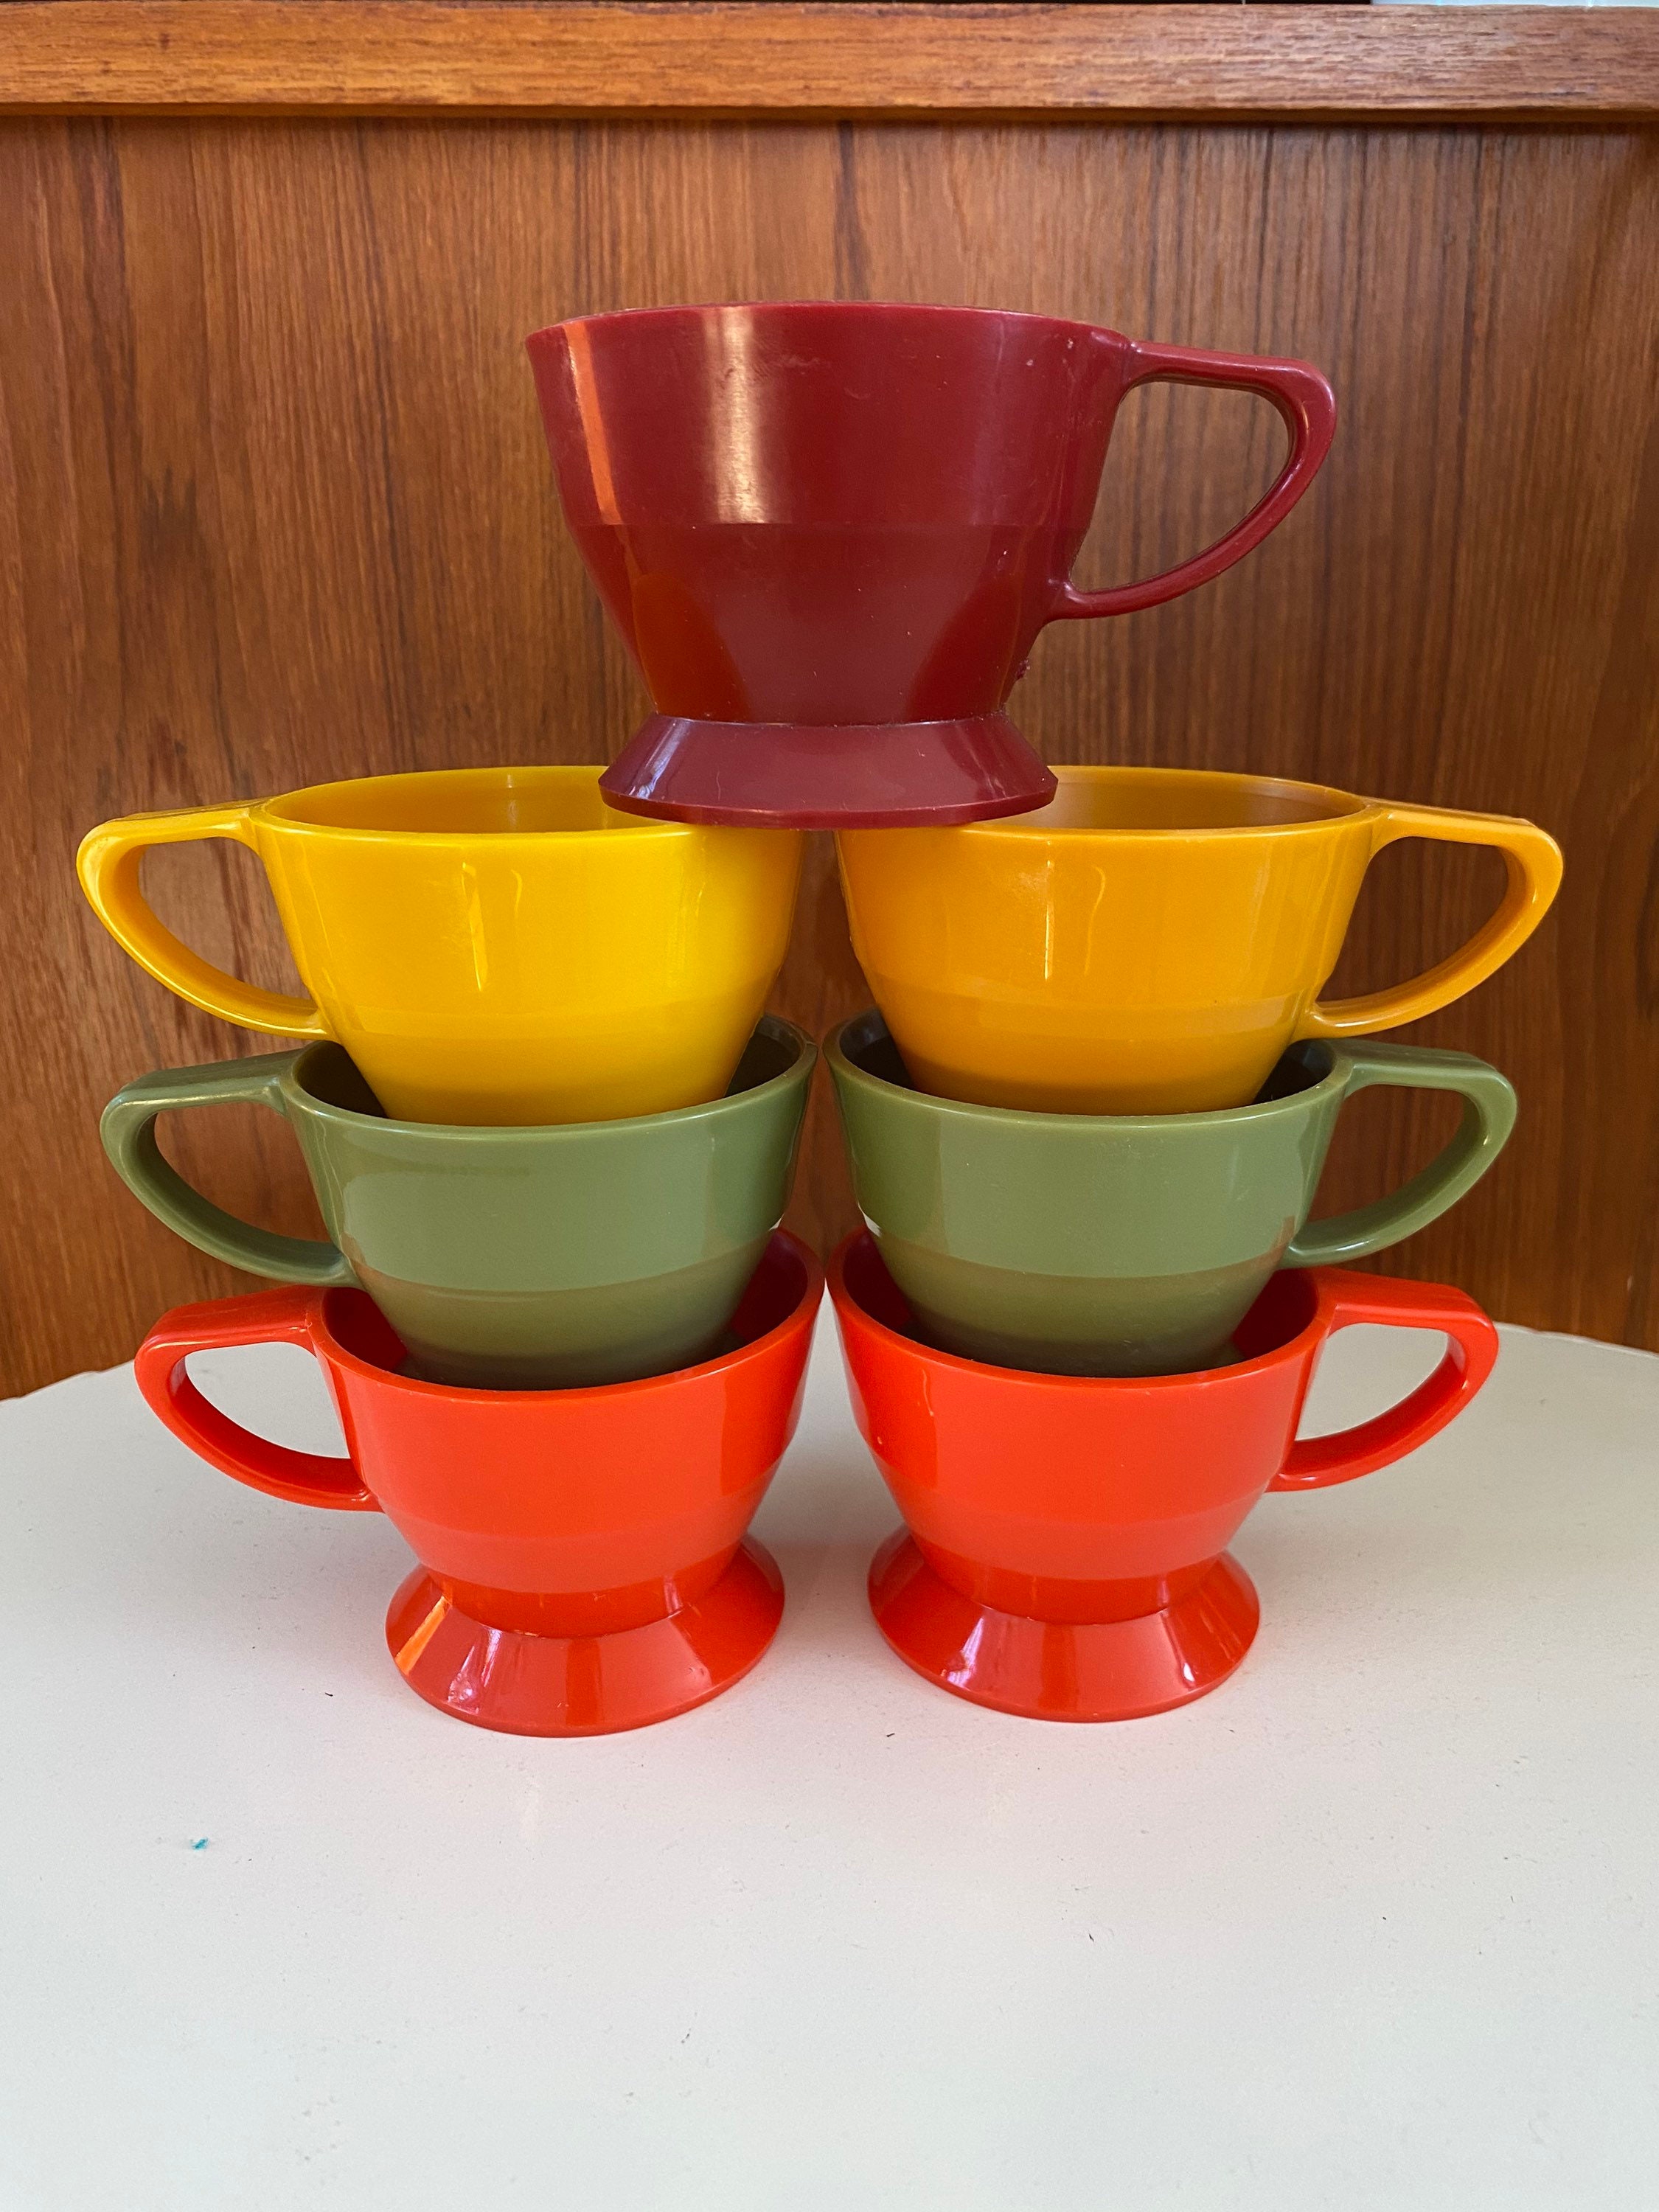 Vintage 1960s 1970s Set of 10 Plastic Small Solo Cups Retro Orange Lifetime  Holder NOS Orange 5 Cozy Cups Prop 5 for Bathroom Dispenser 